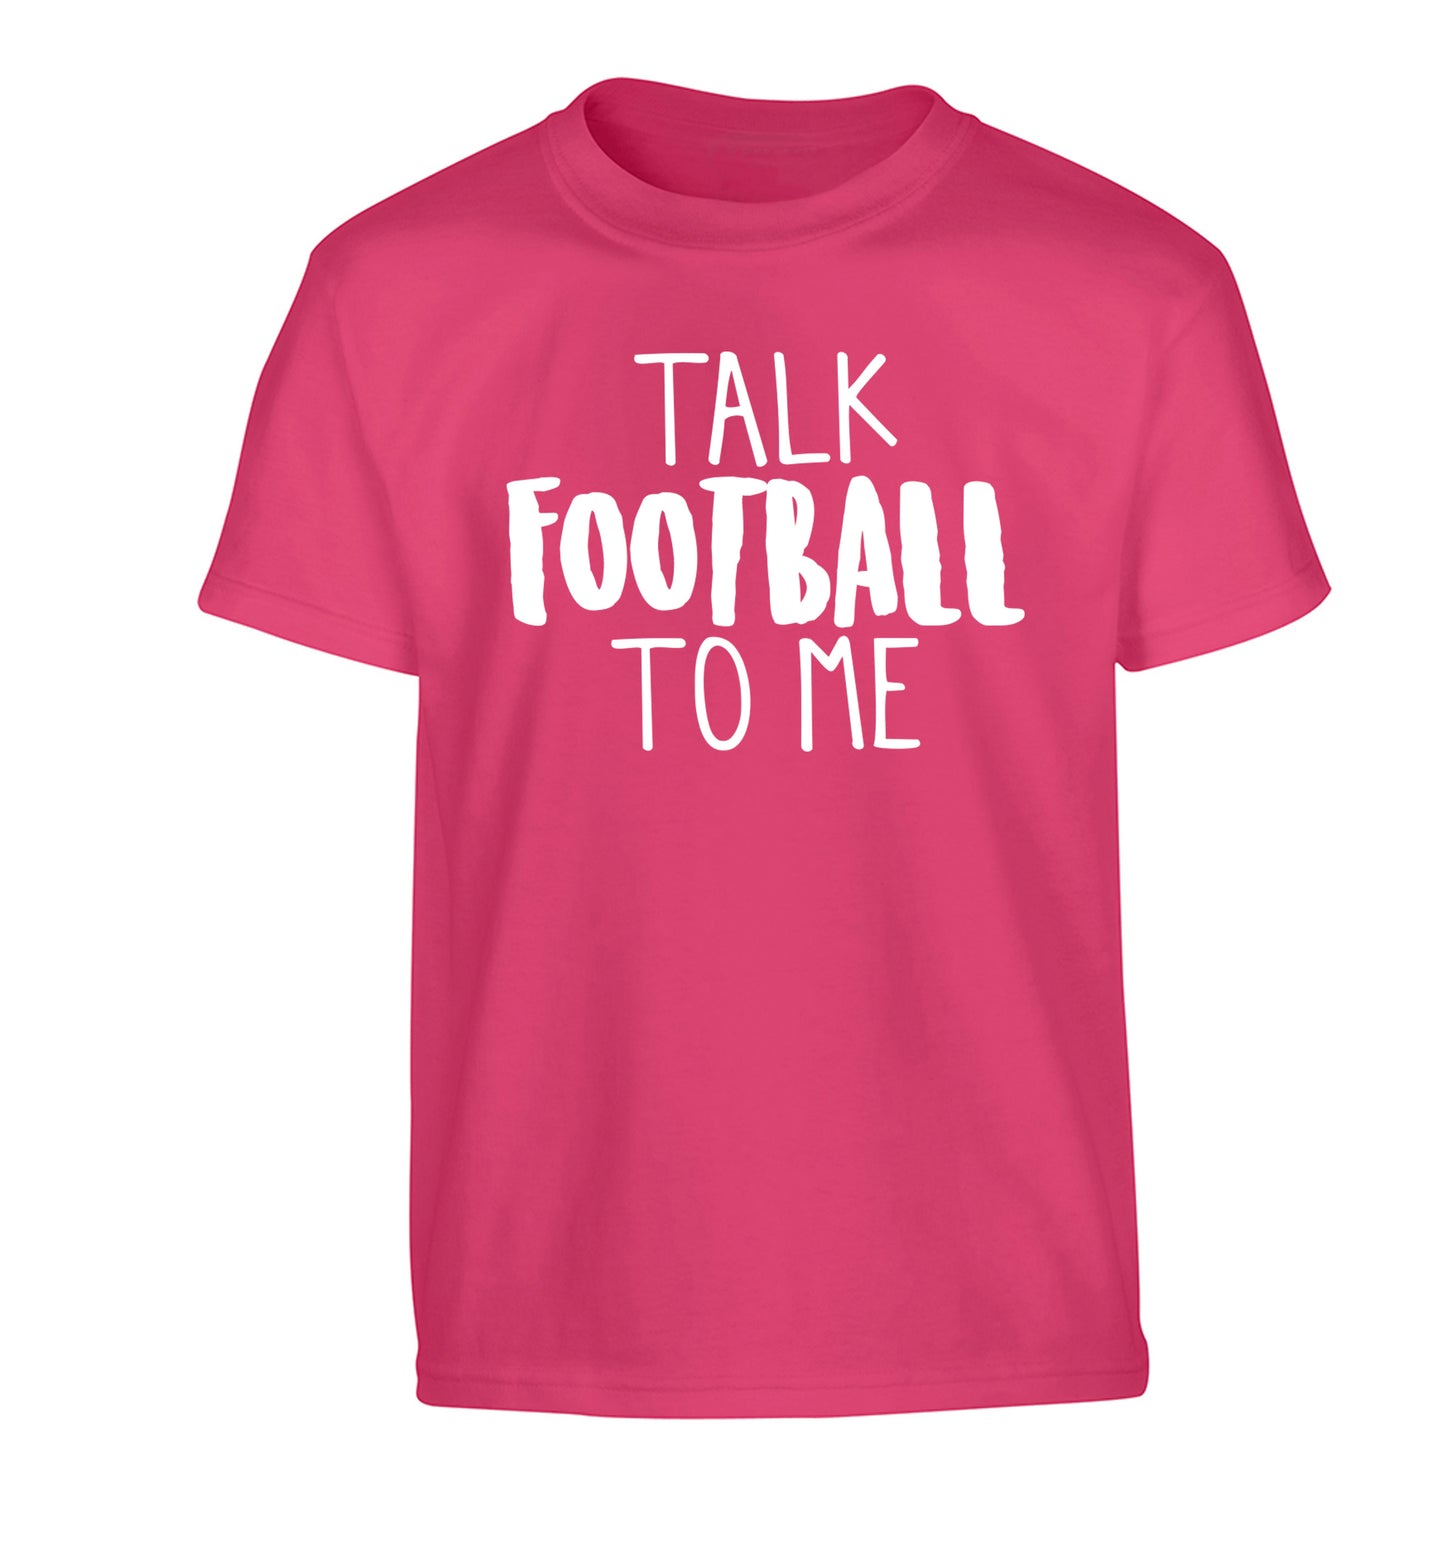 Talk football to me Children's pink Tshirt 12-14 Years